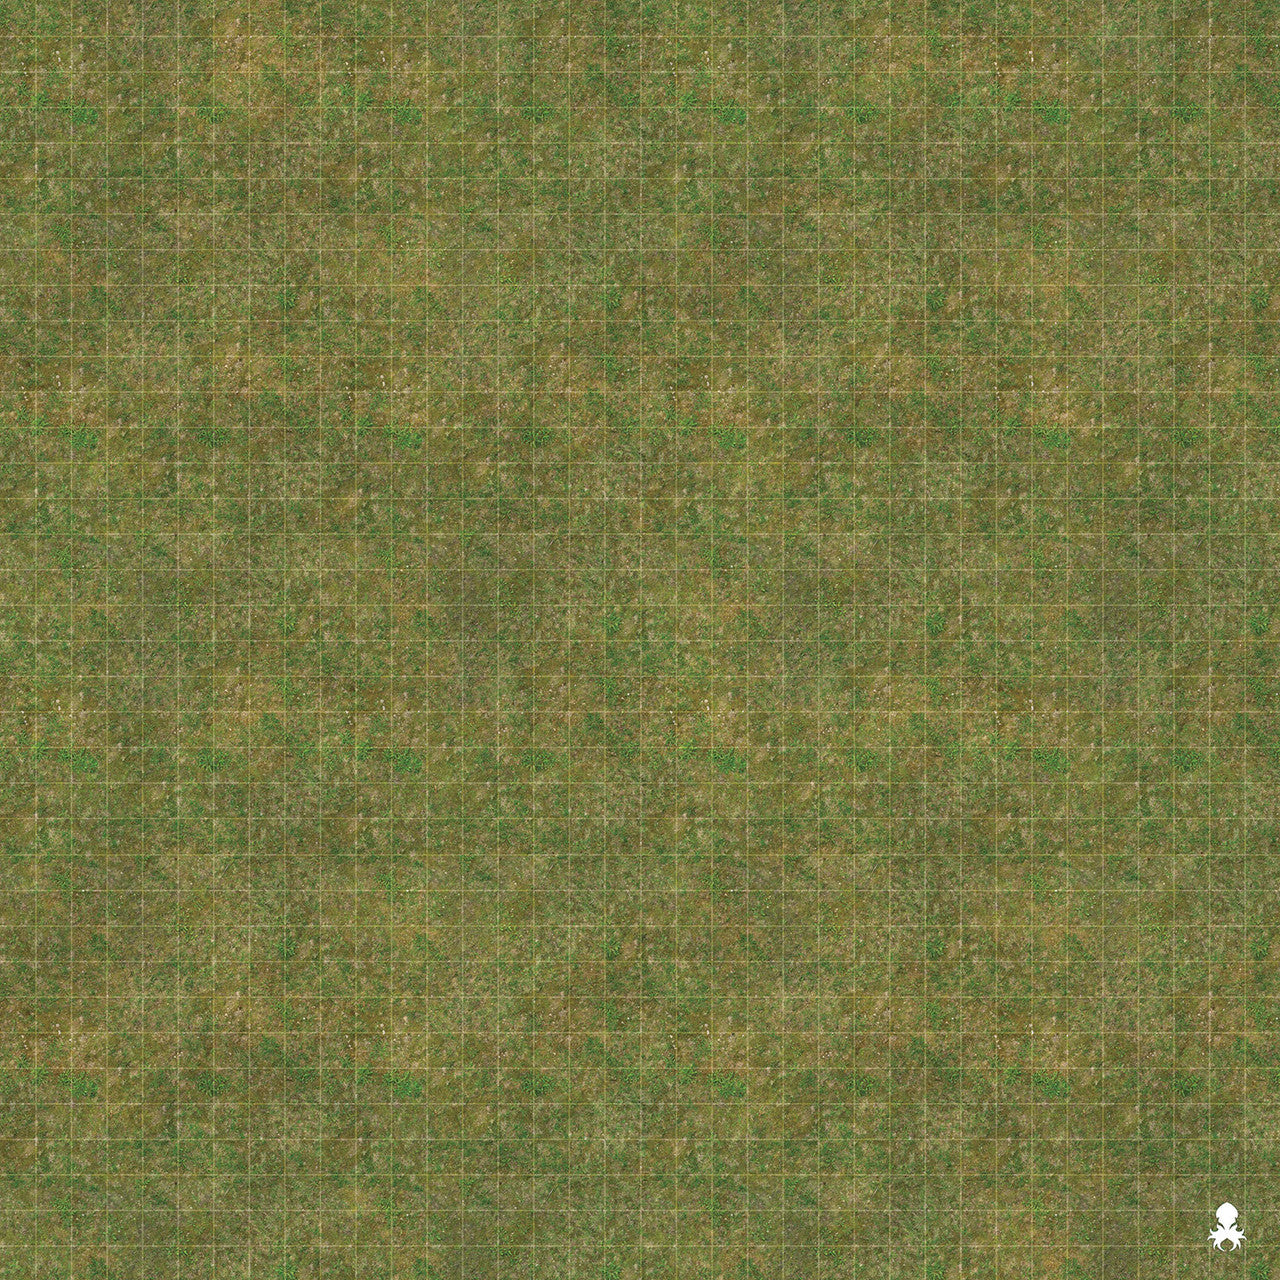 Kraken Dice RPG Encounter Map Quick Mat- Grassy Terrain 36"x36"